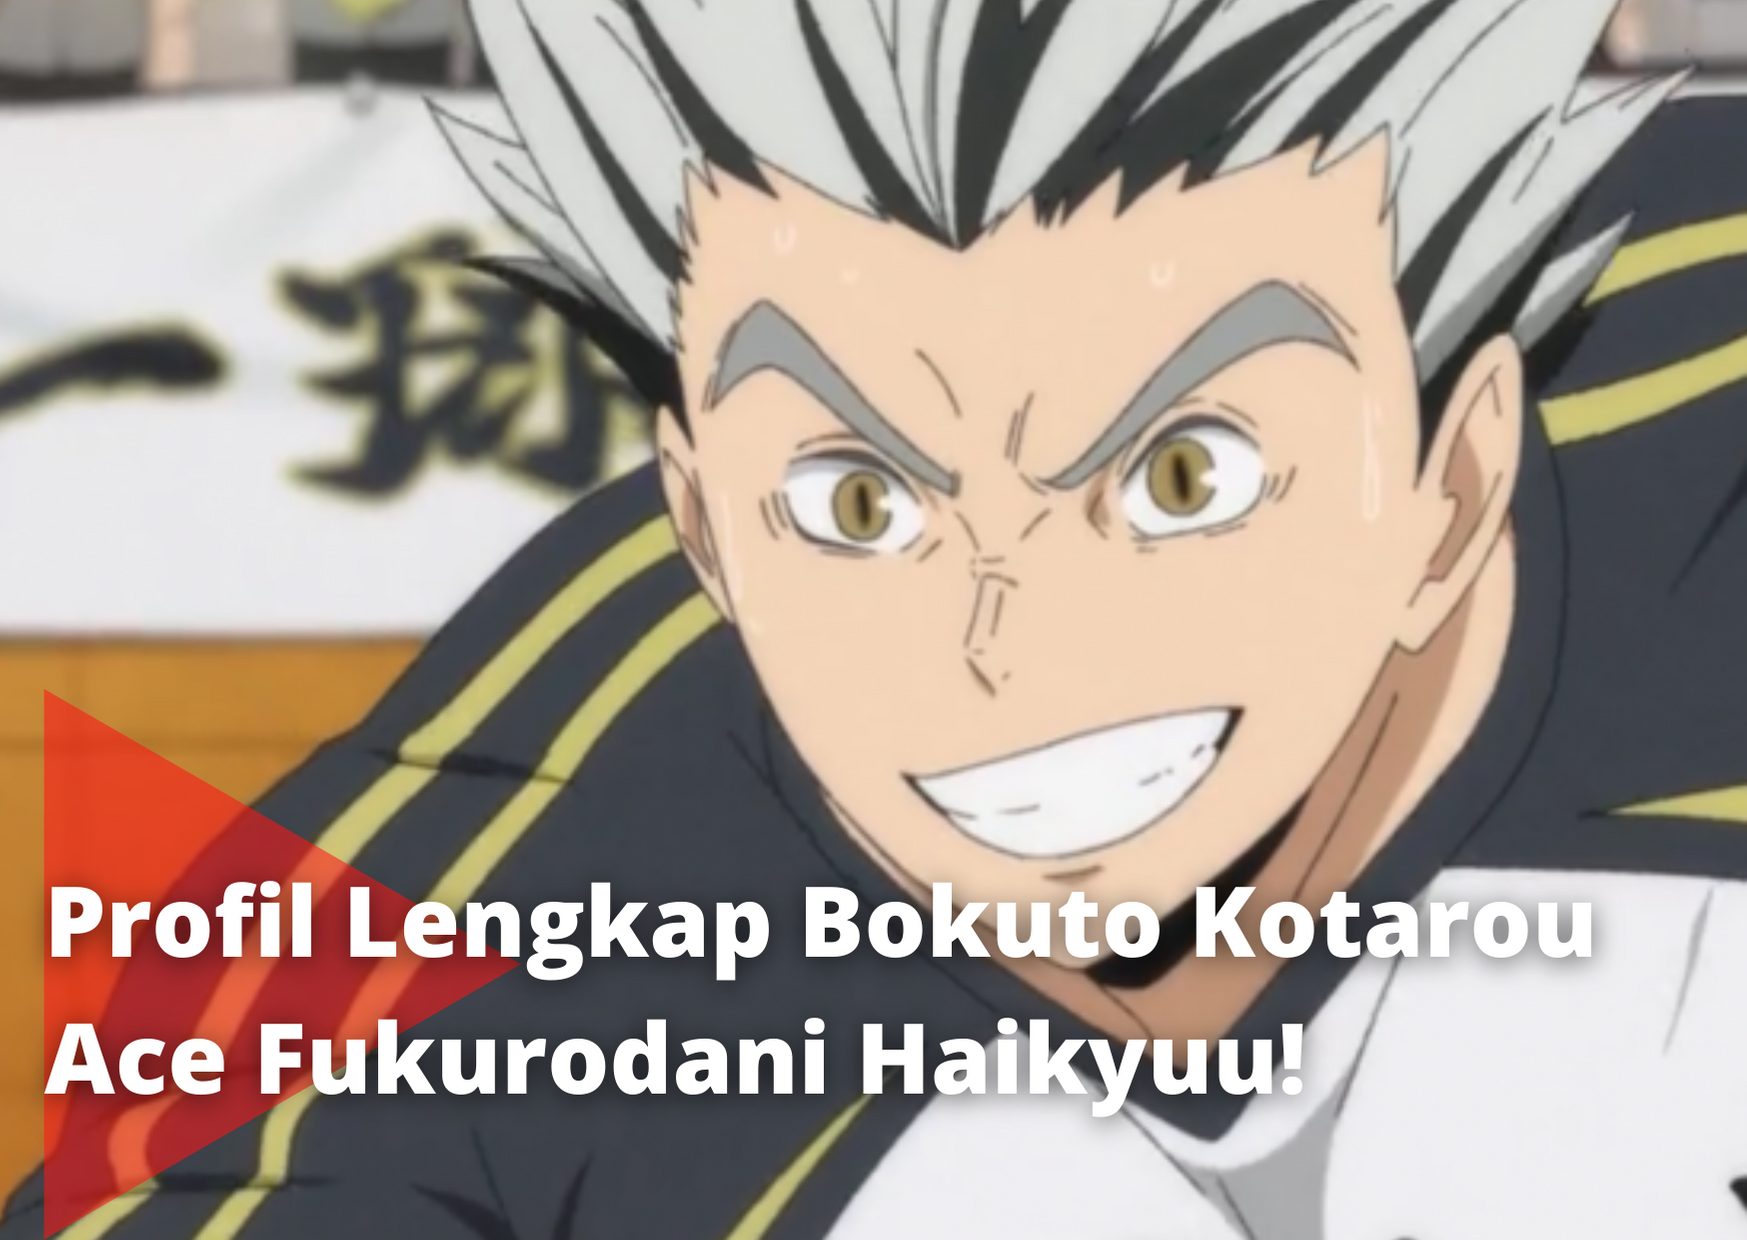 Profil Lengkap Bokuto Kotarou Ace Fukurodani Haikyuu!